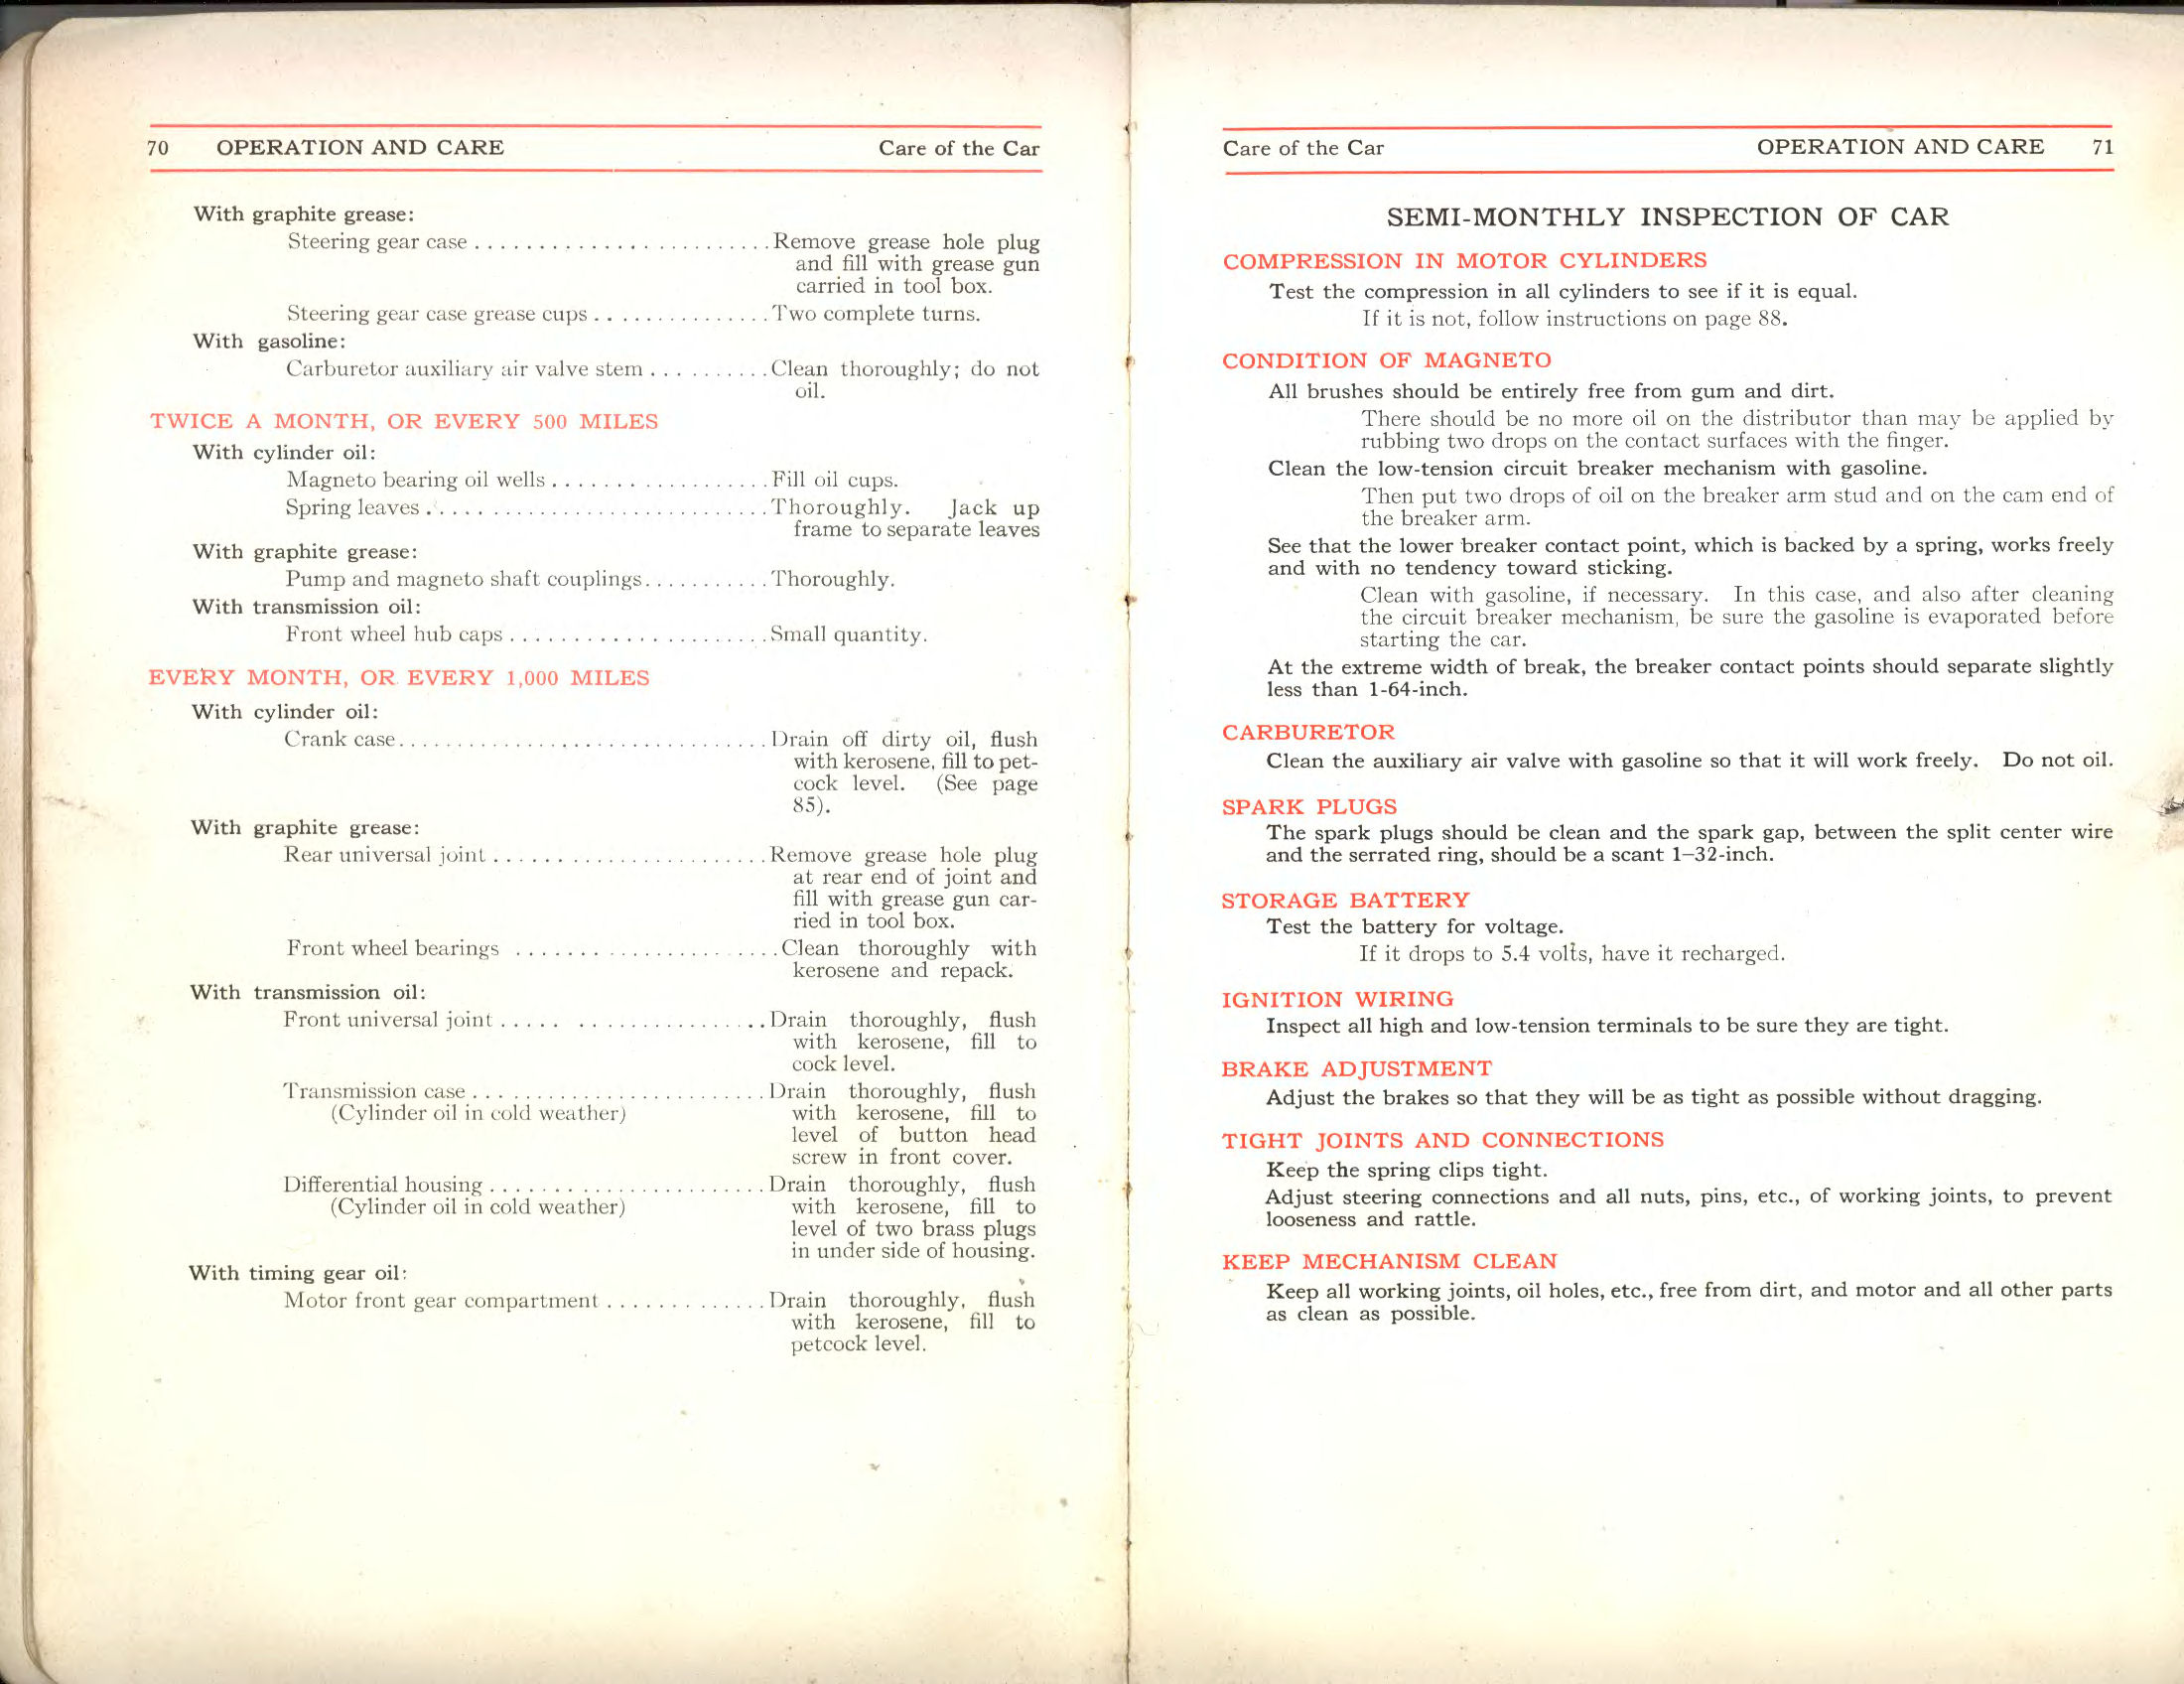 1911 Packard Manual-070-071